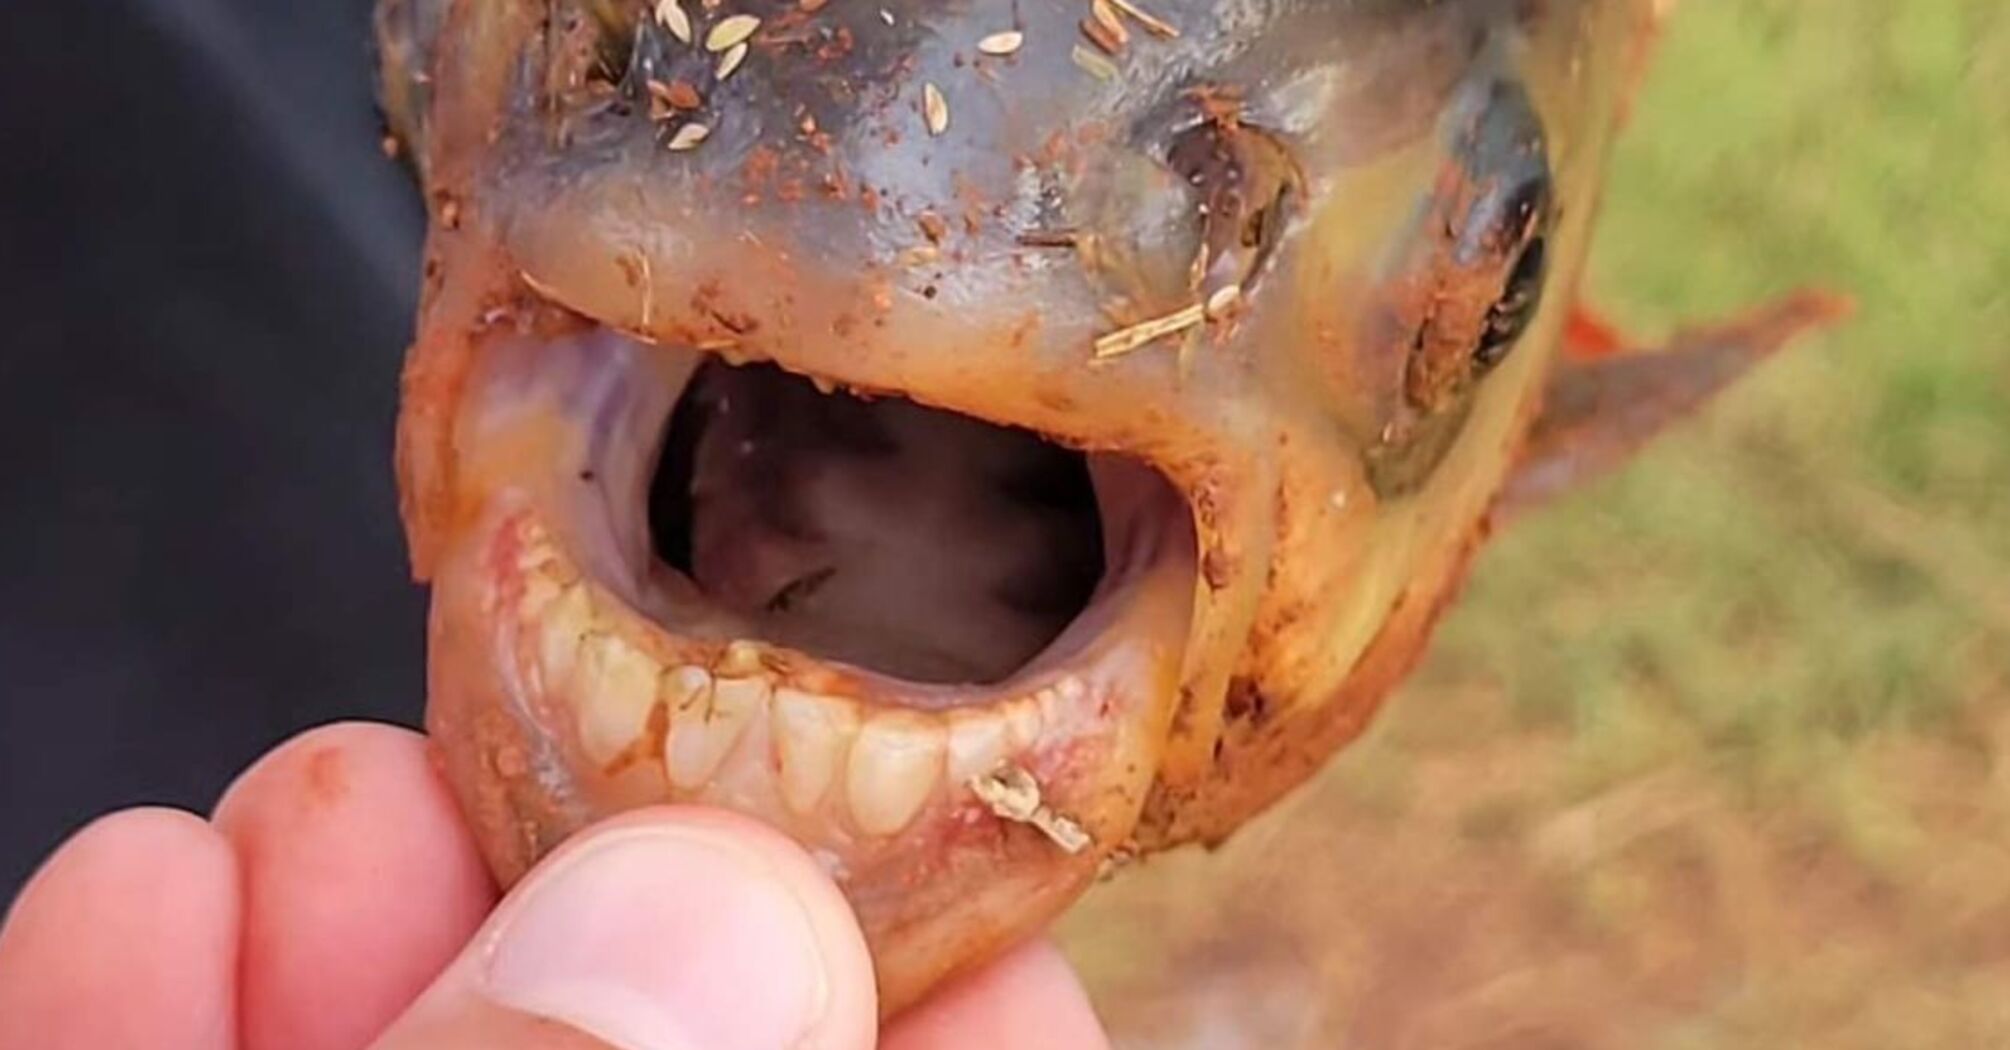 US fisherman catches rare fish with 'human teeth' (photo)